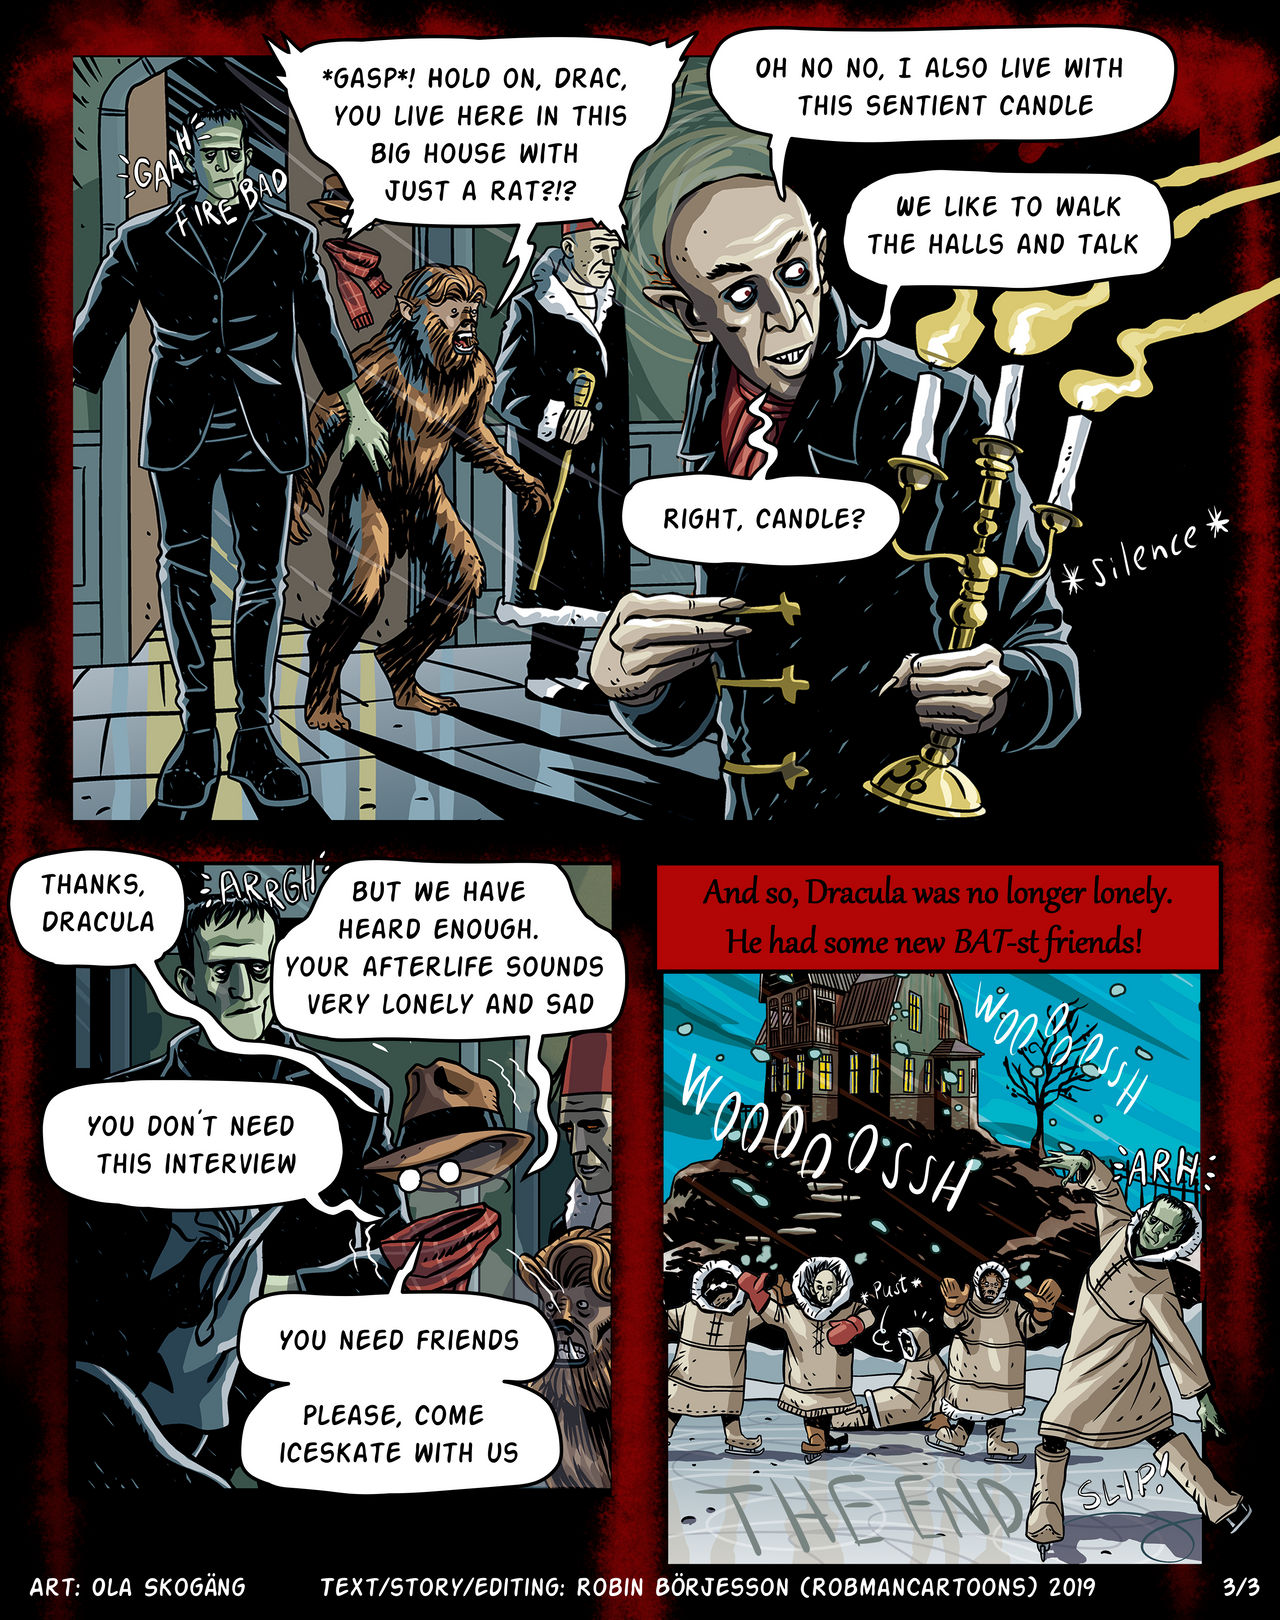 Dracula 3/3, 2019 (edited Ola Skogang art) by RobmanCartoons